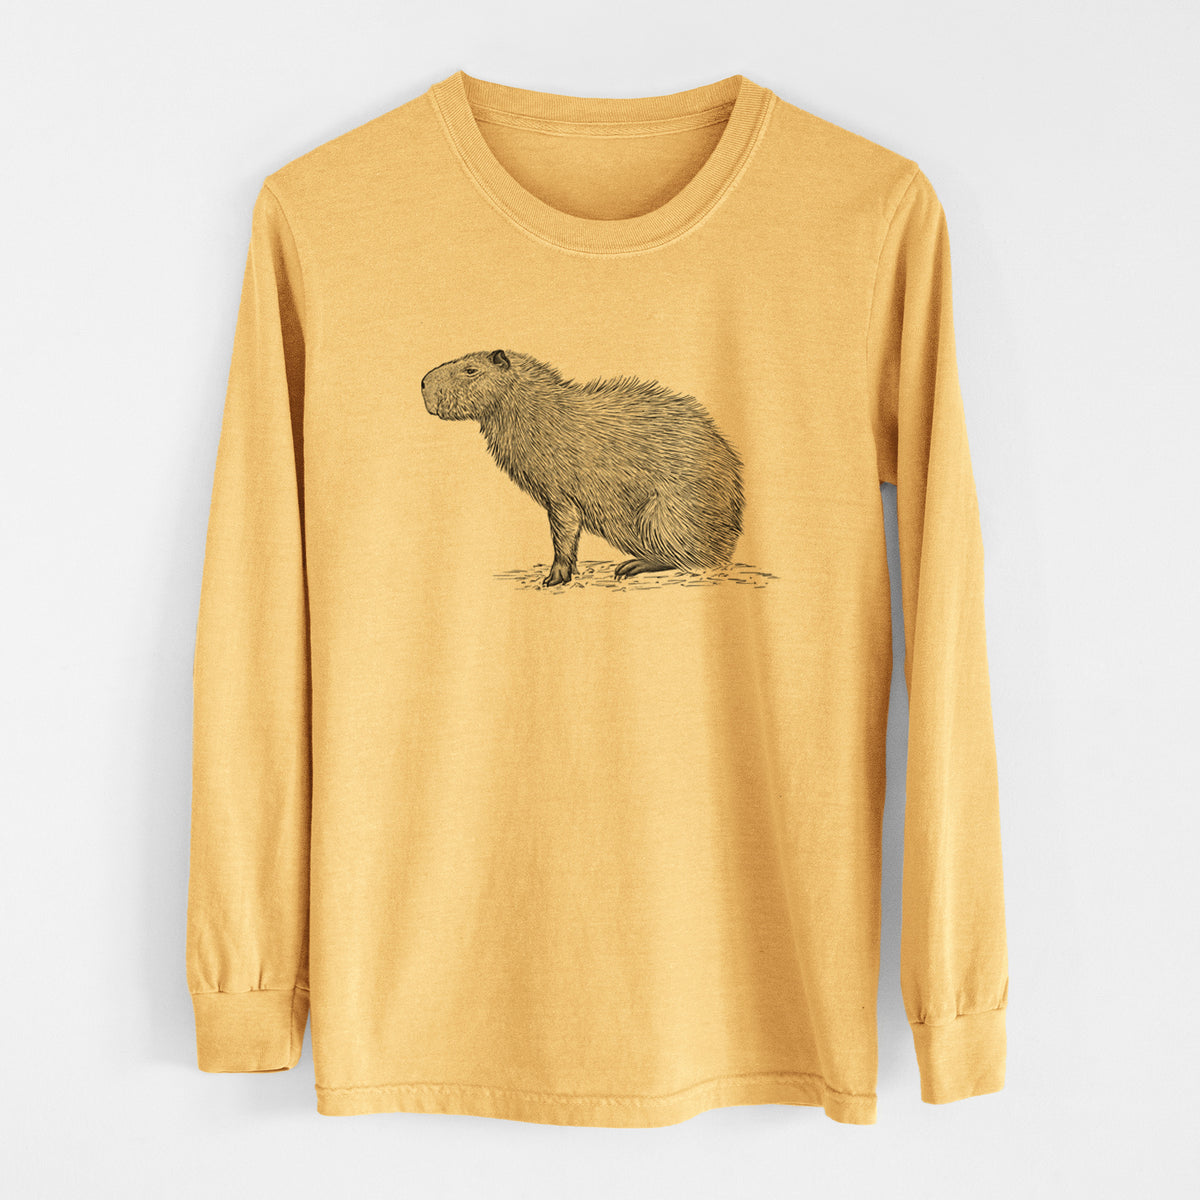 Capybara Profile - Hydrochoerus hydrochaeris - Heavyweight 100% Cotton Long Sleeve